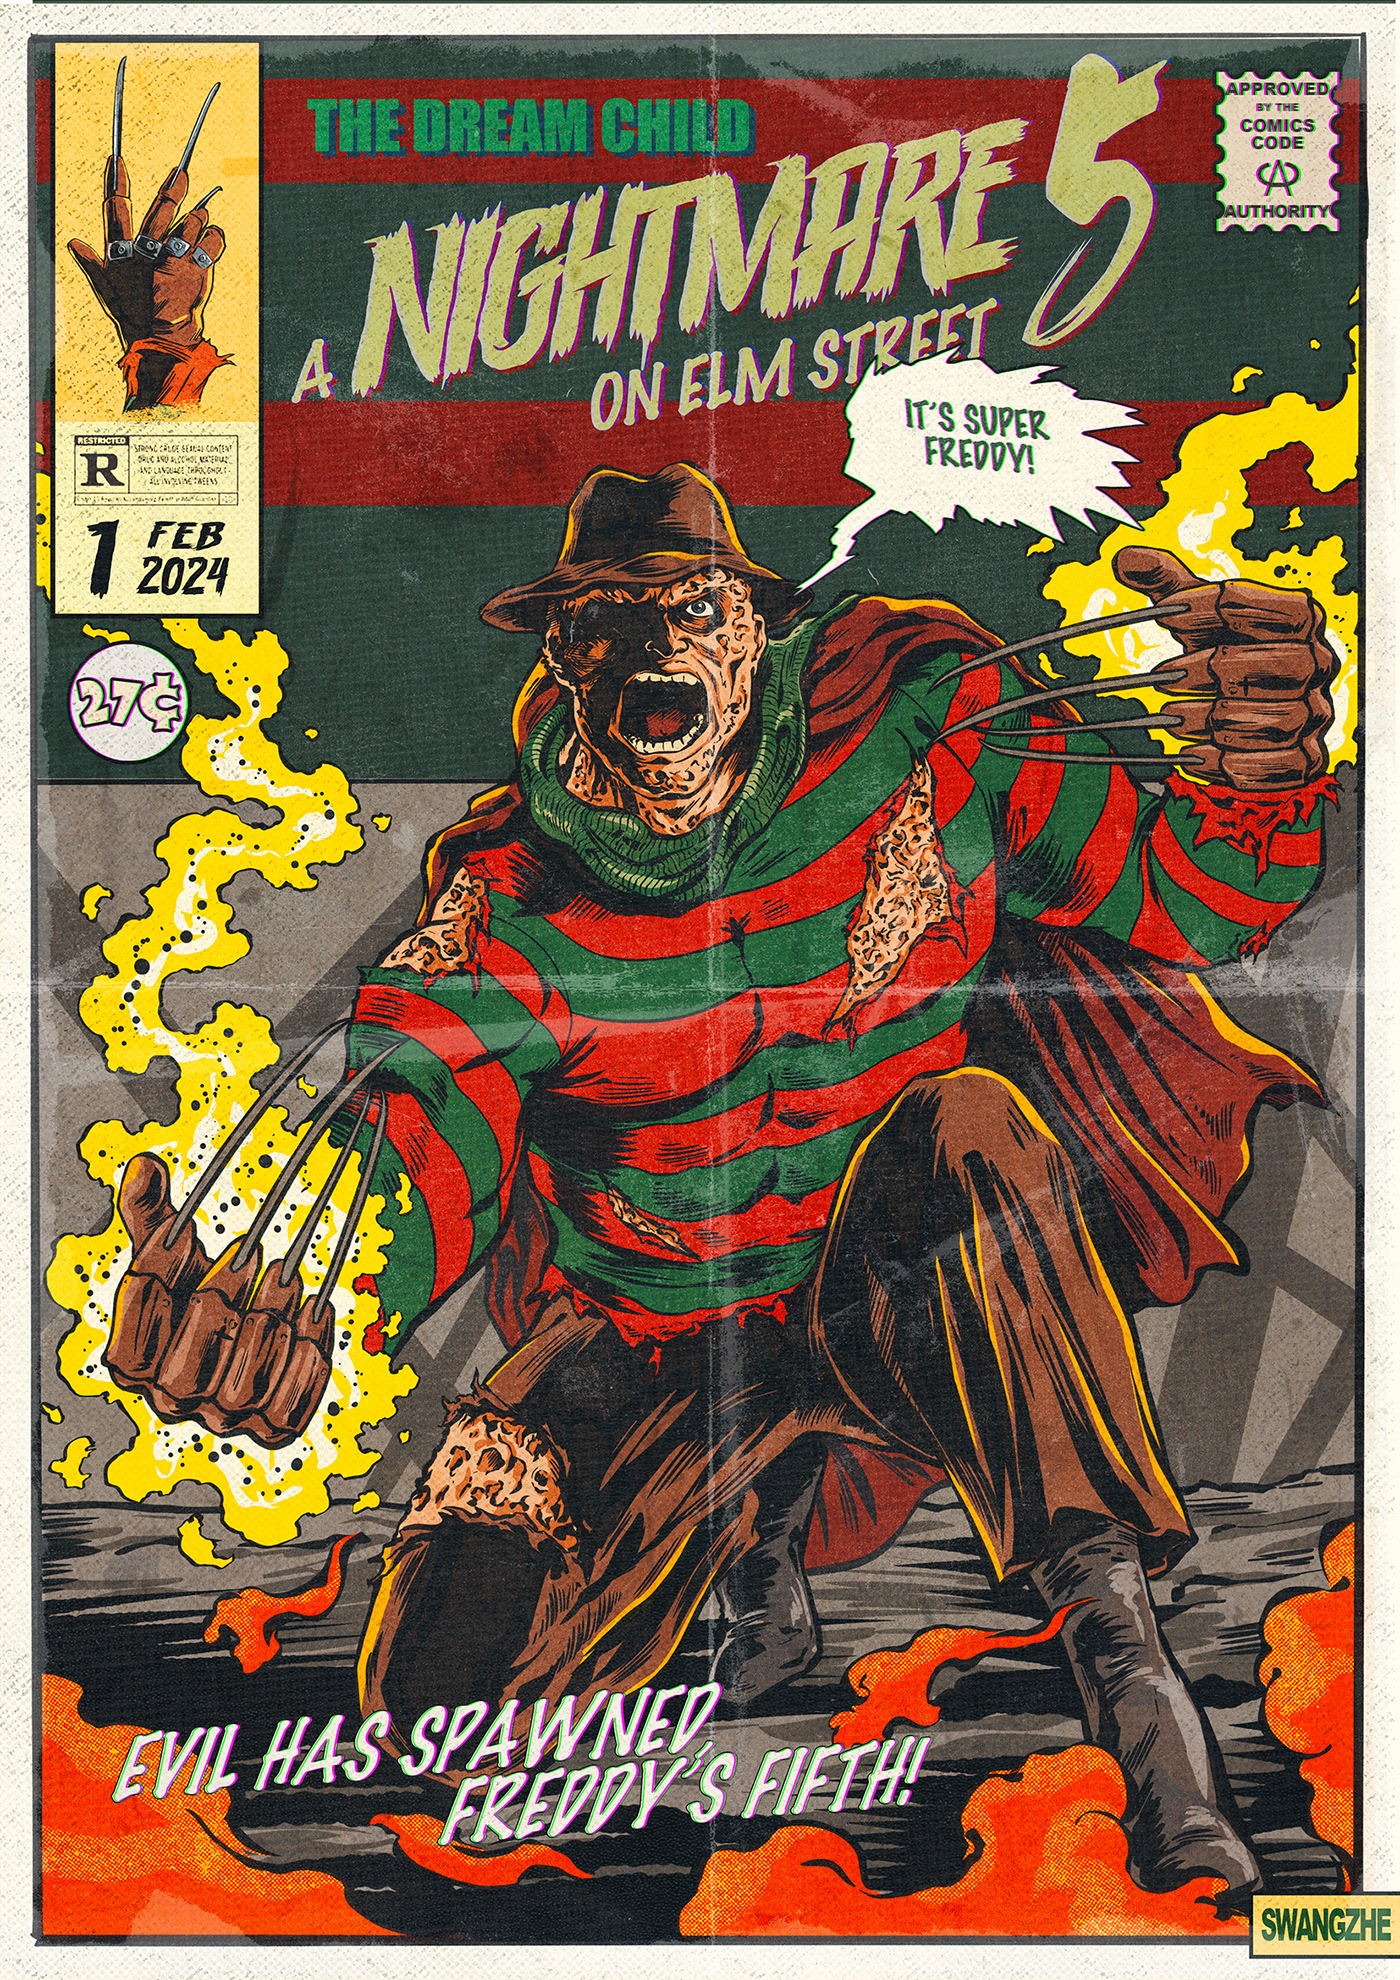 ILLUSTRATION  painting   Drawing  artist artwork comic movie poster vintage illustration horror monster